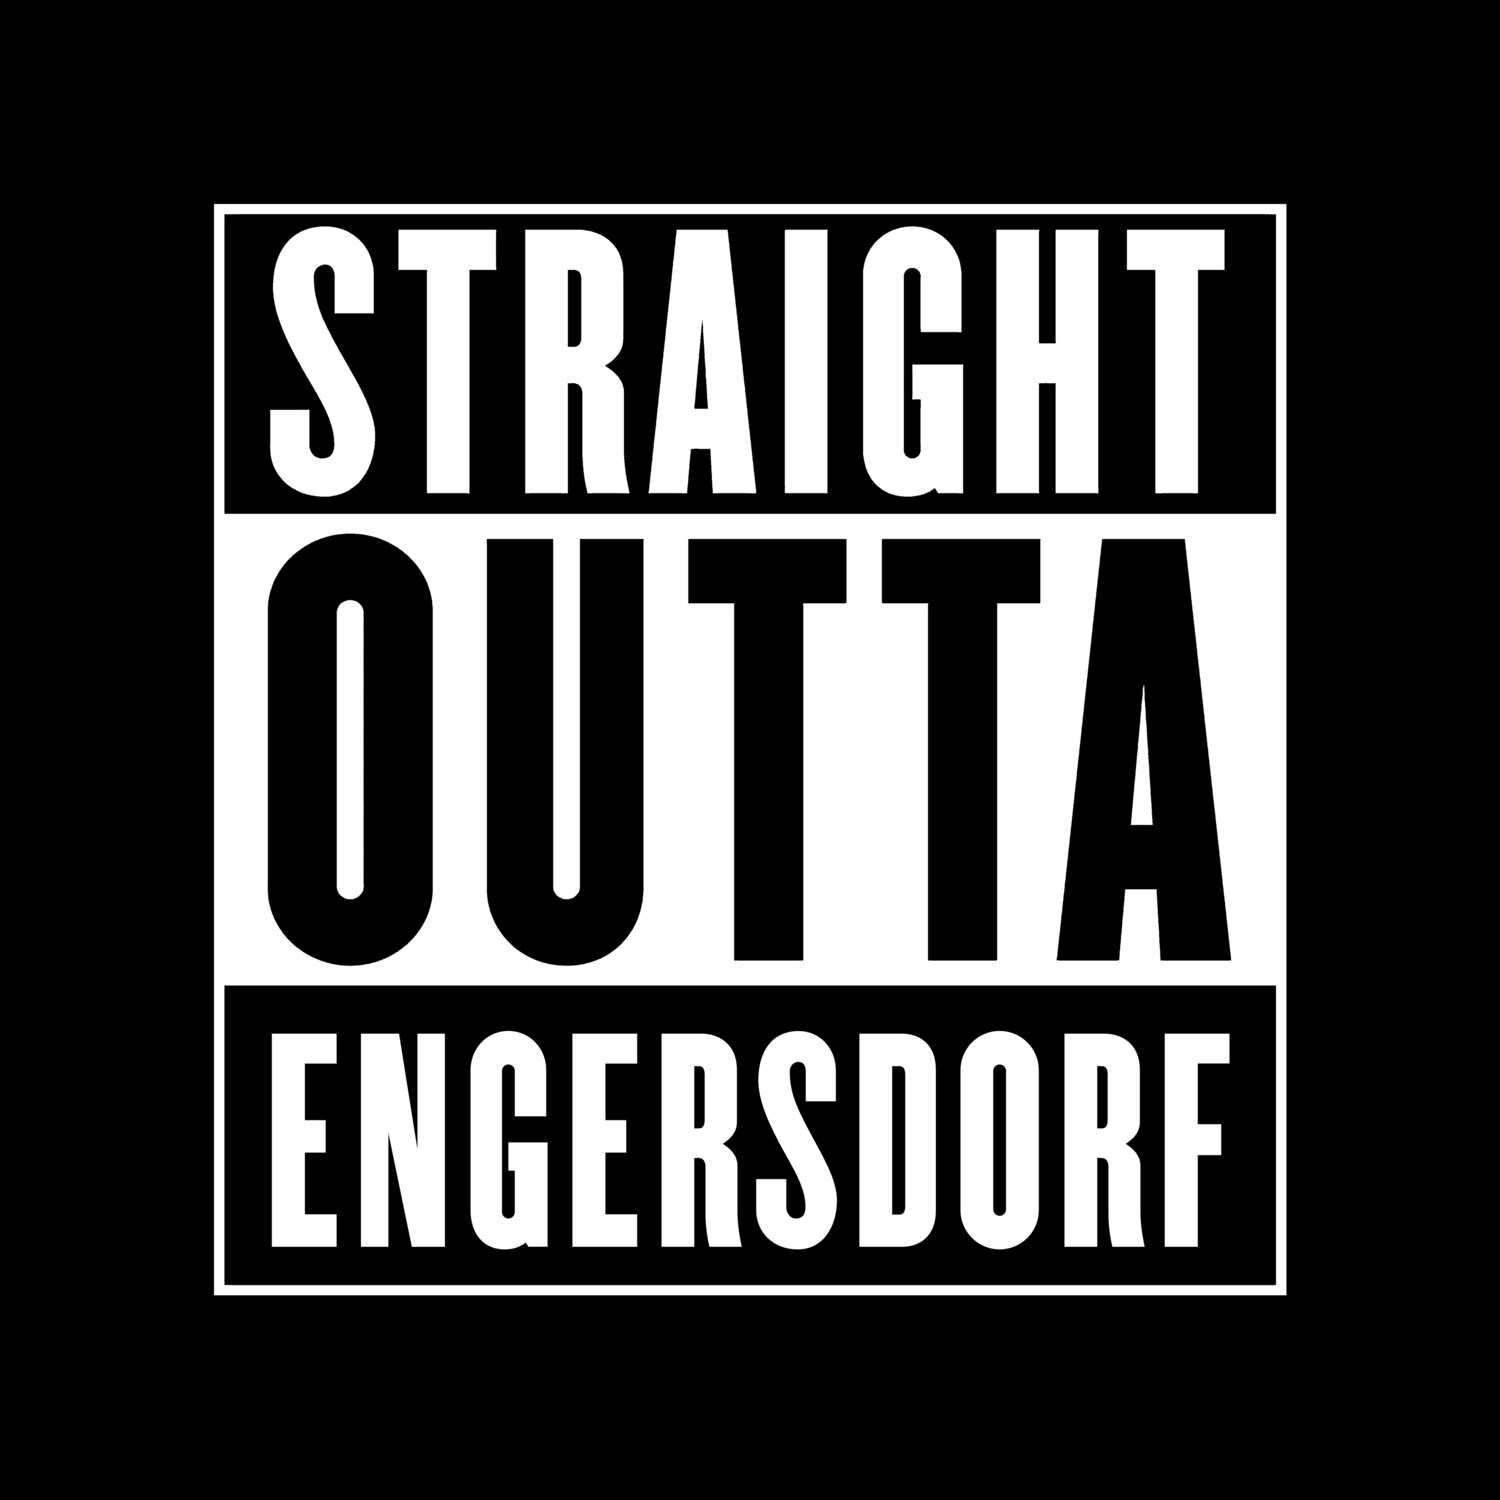 Engersdorf T-Shirt »Straight Outta«